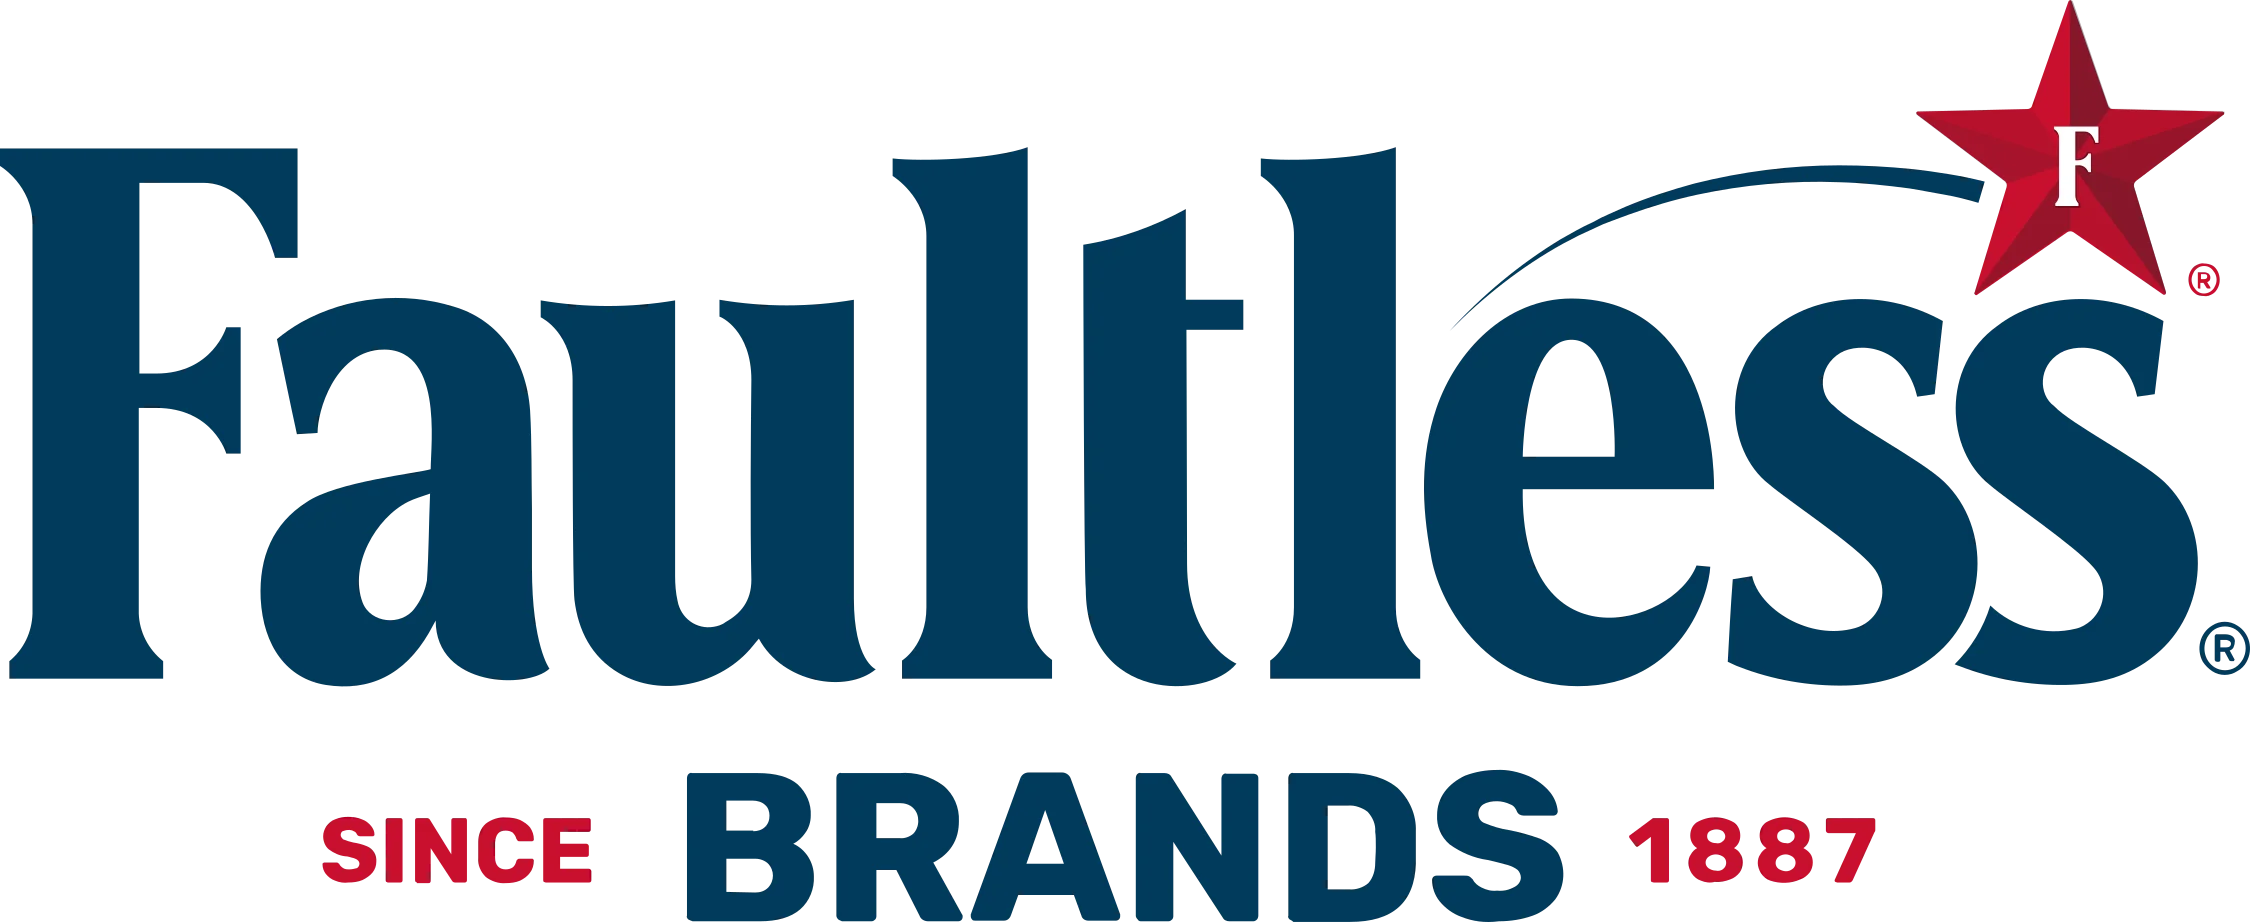 Faultless Brands logo